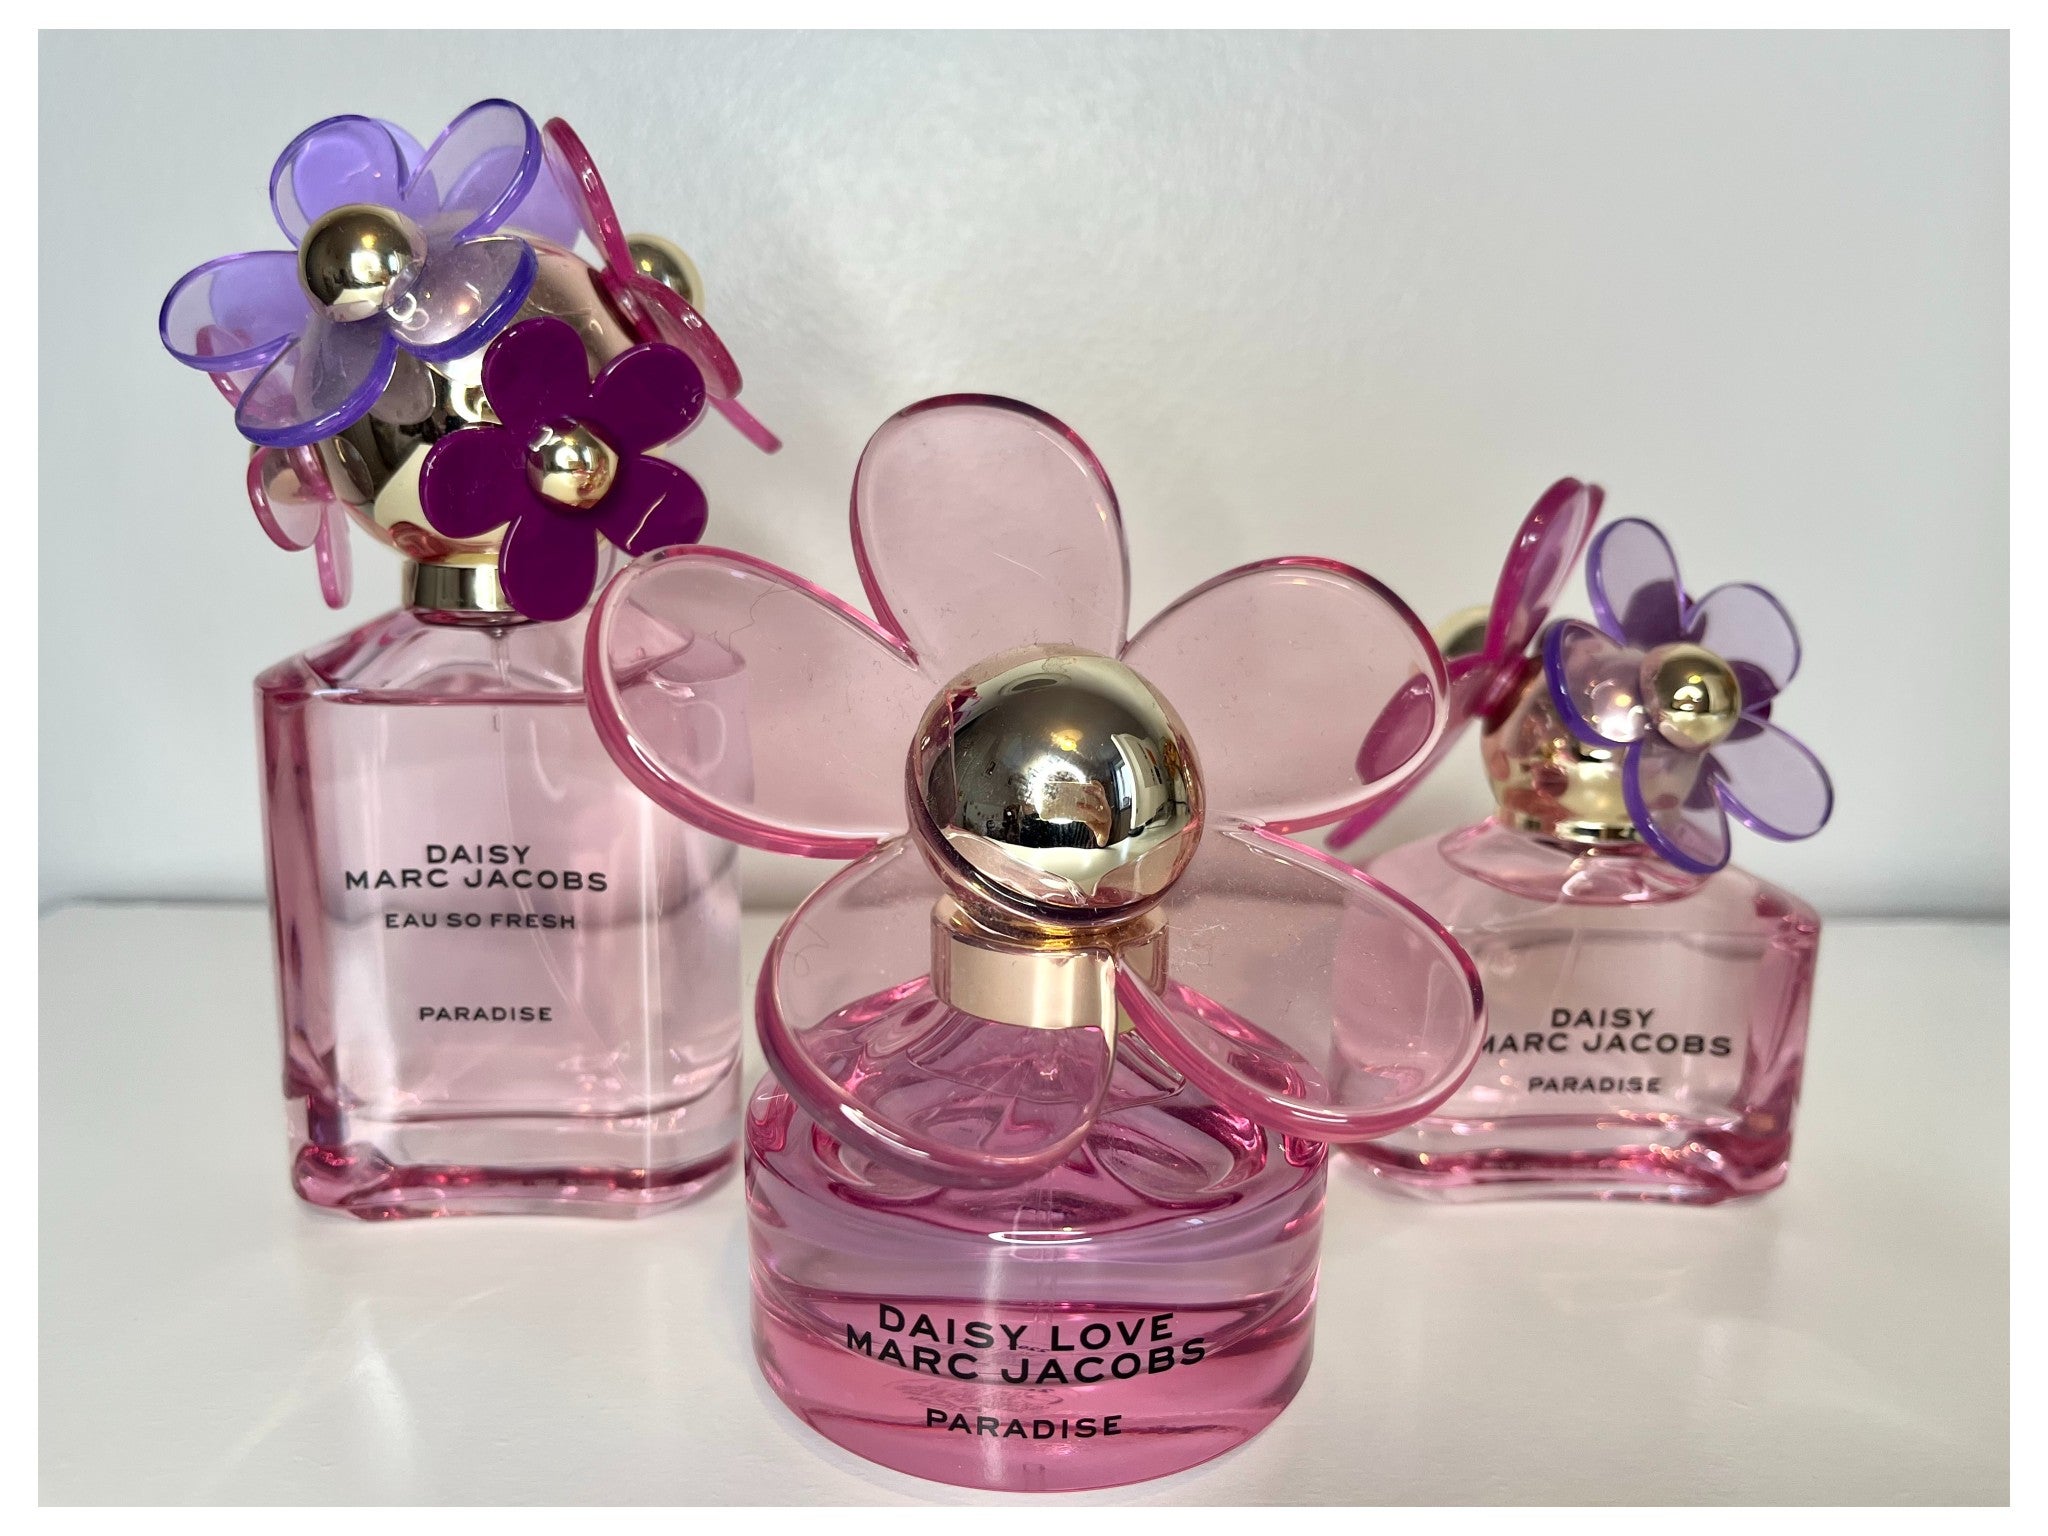 Marc Jacobs DAISY LOVE PARADISE Limited Edition EDT 50ml - Fragrance